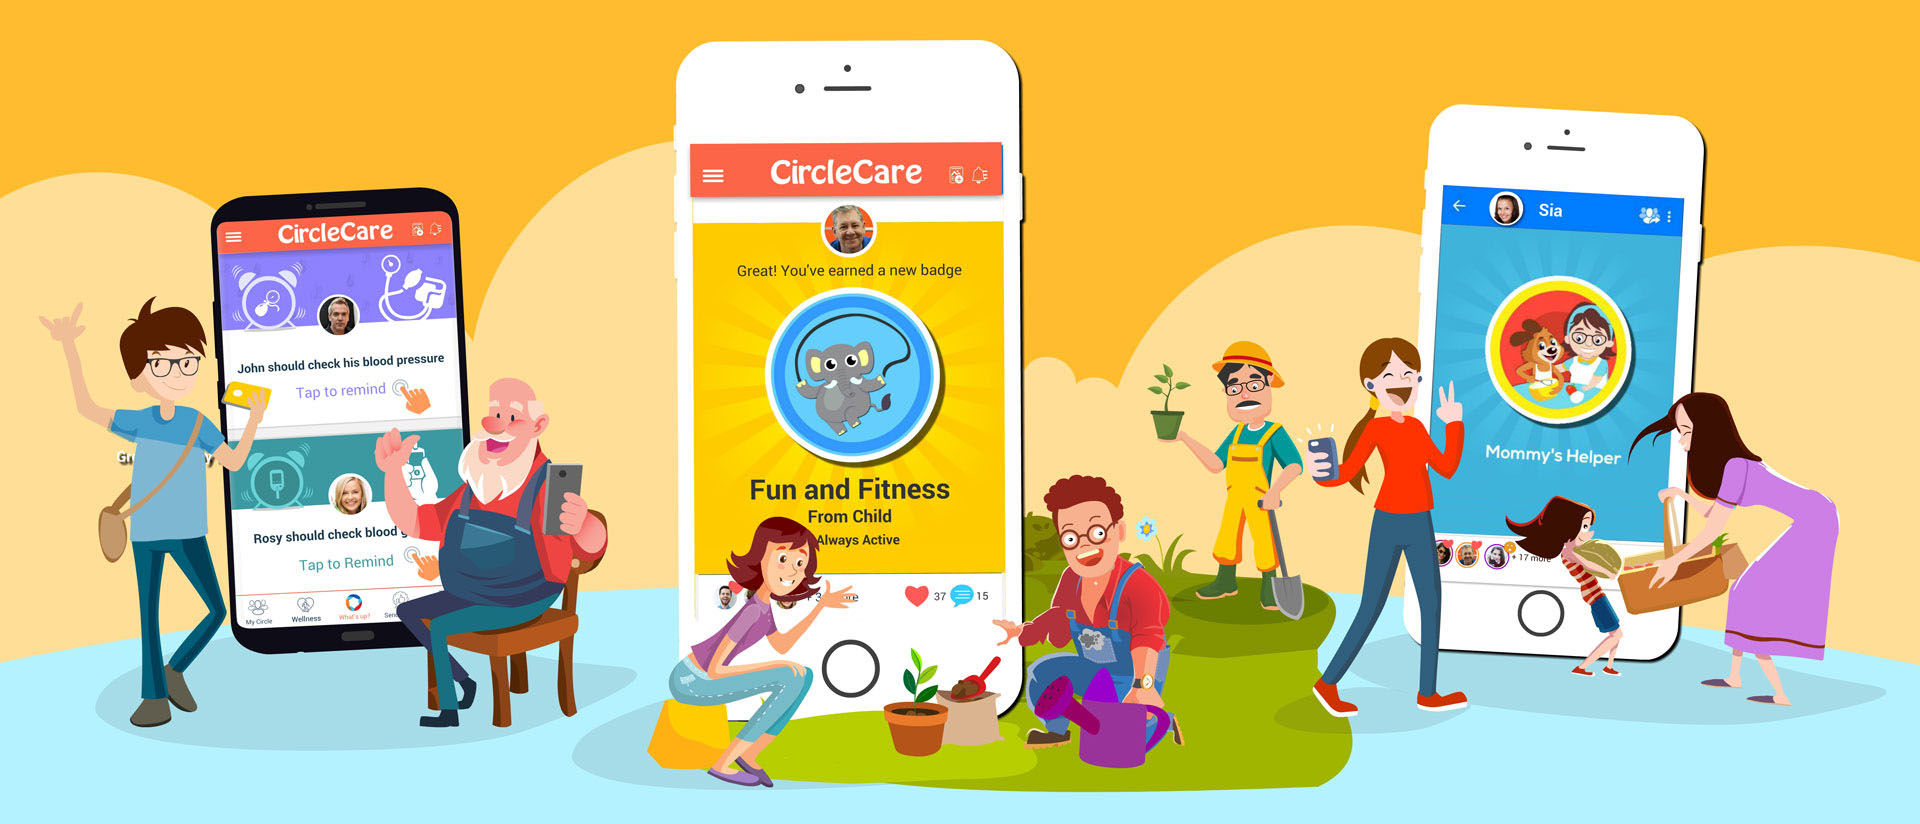 CircleCare-kid-safe-platform-health-wellness-app